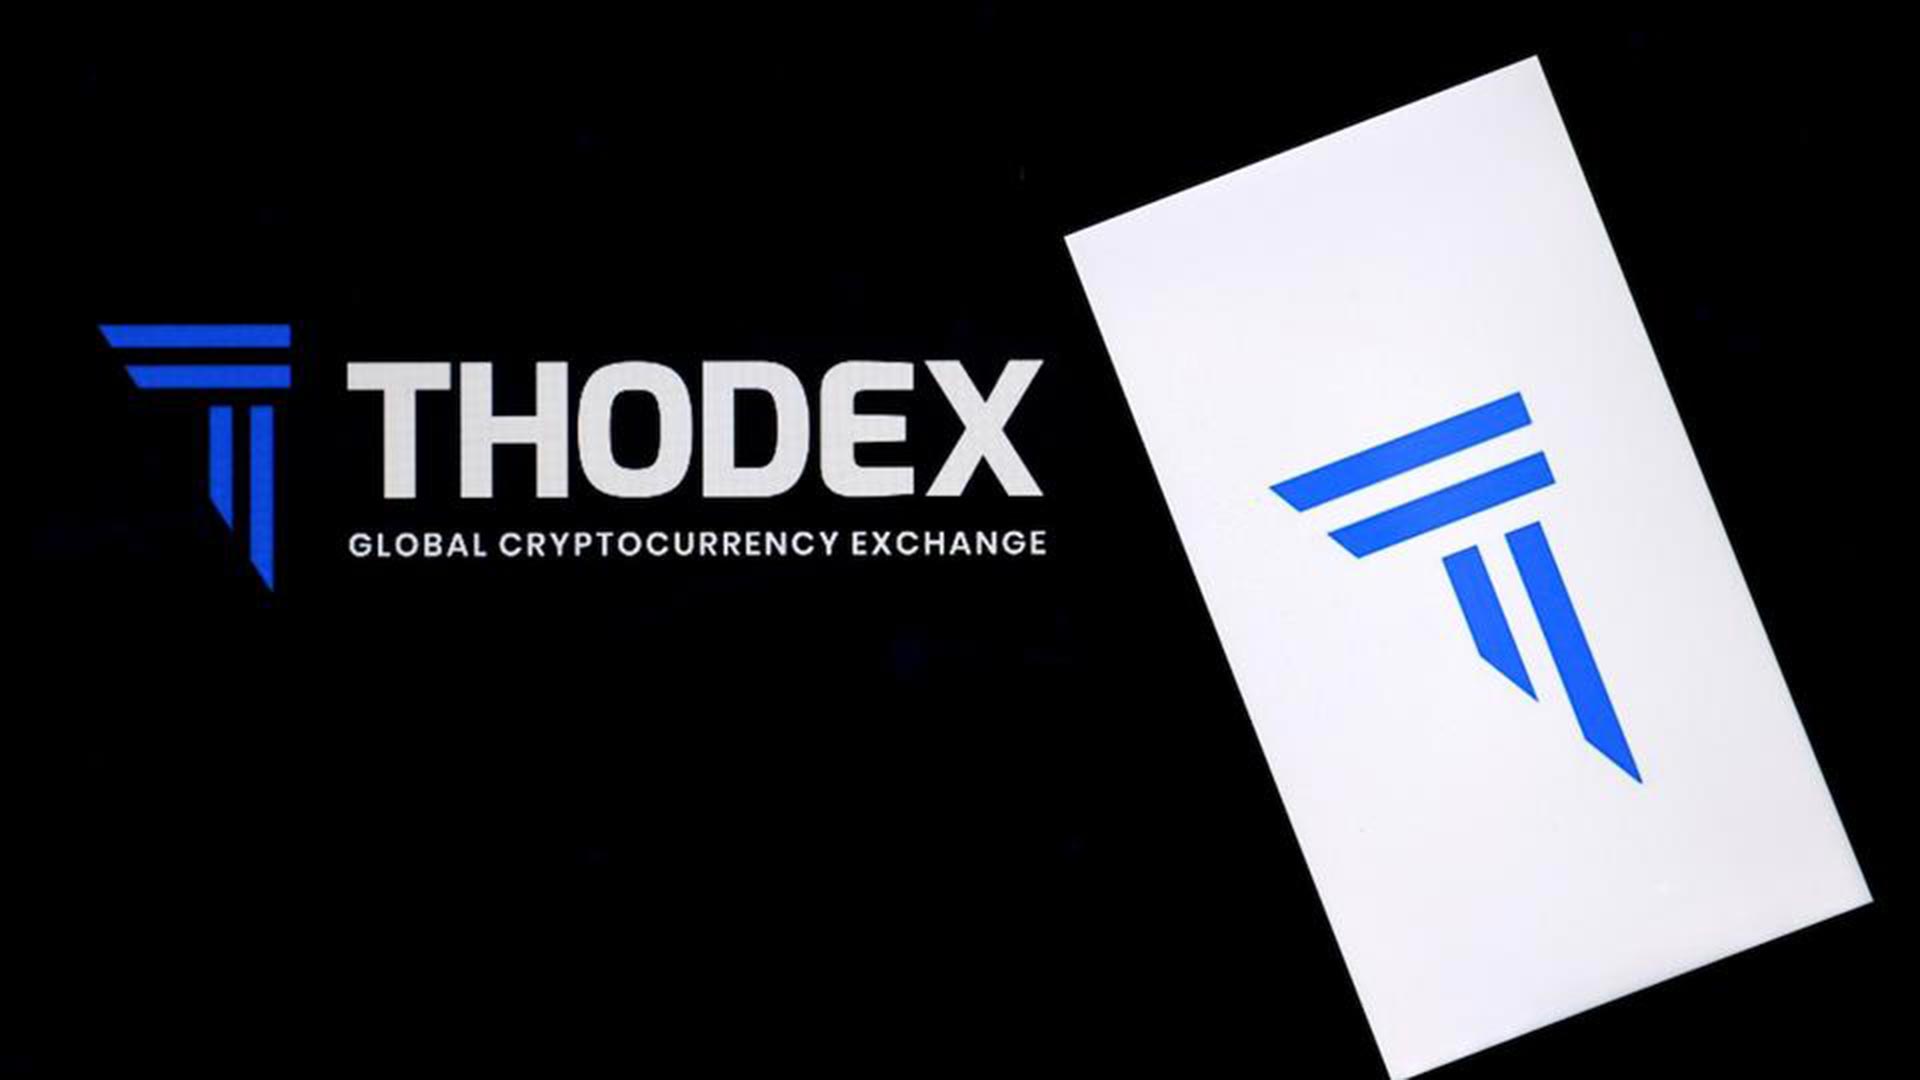 La plataforma Thodex se "desvaneció" de las redes la semana pasada